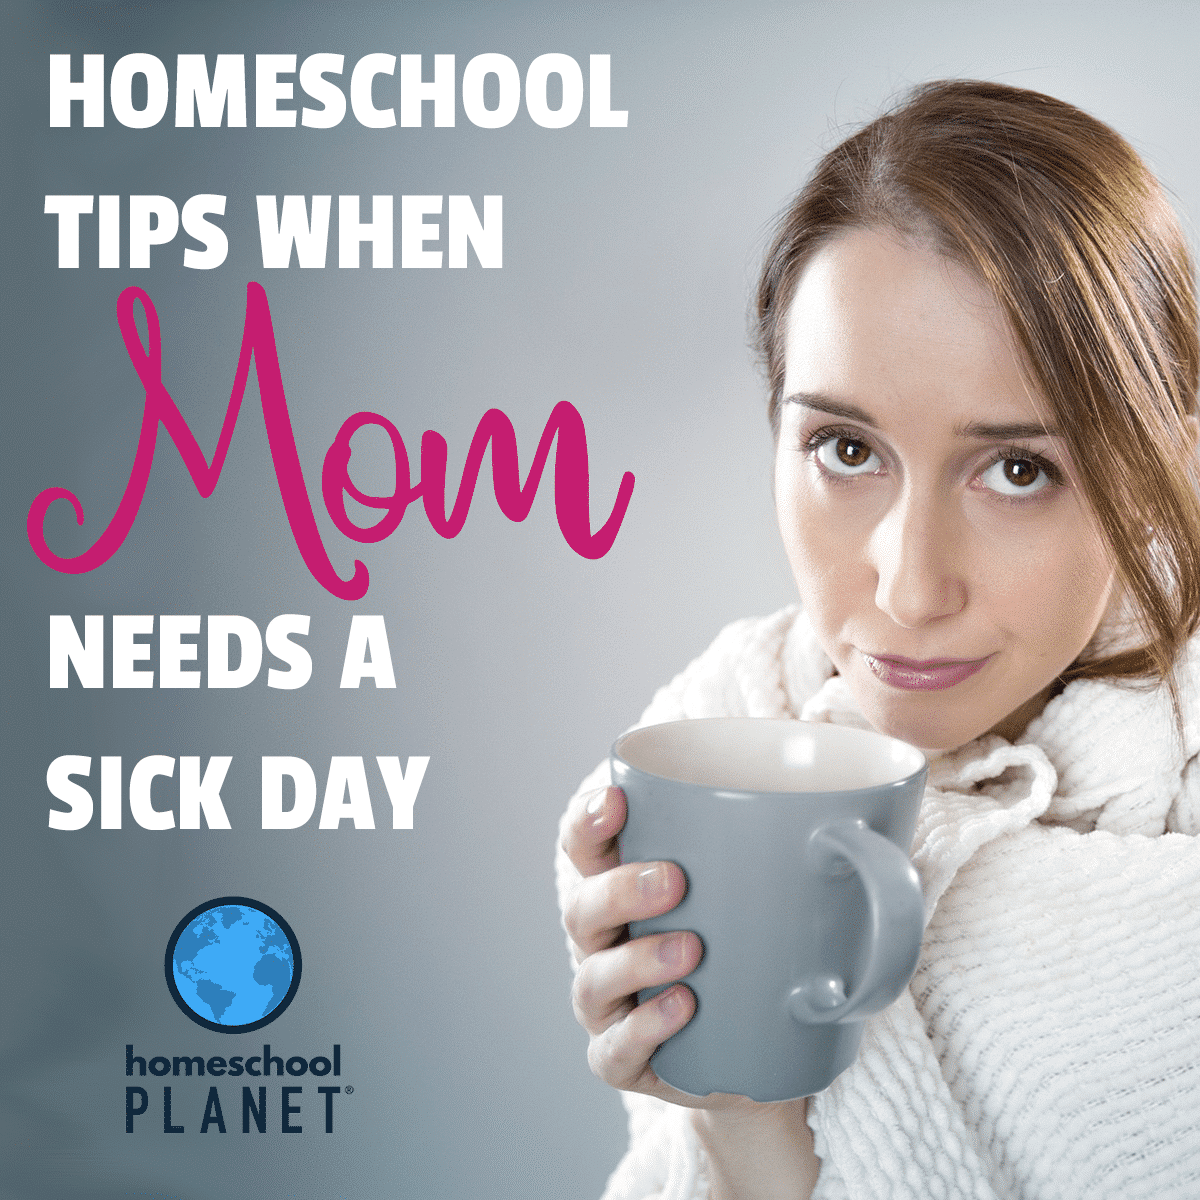 Homeschool Tips When Mom Needs a Sick Day